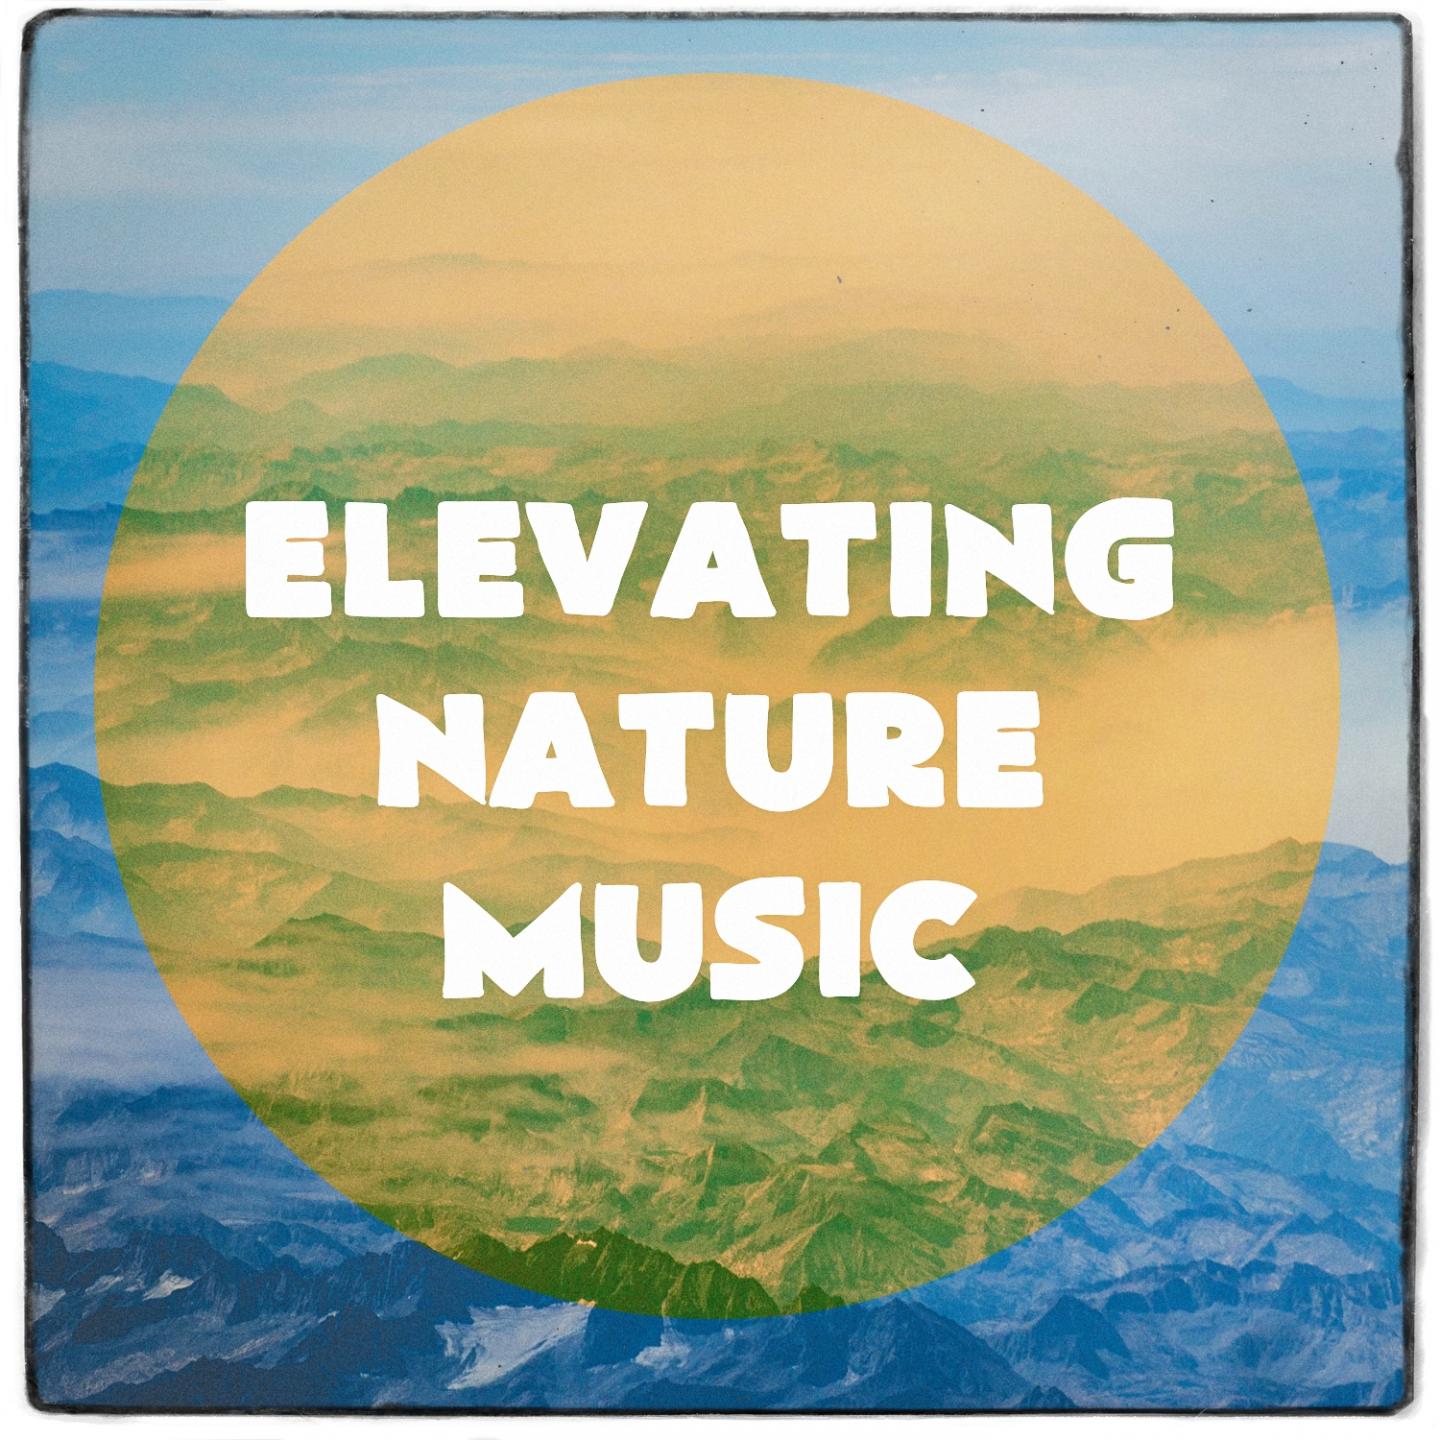 Elevating nature music